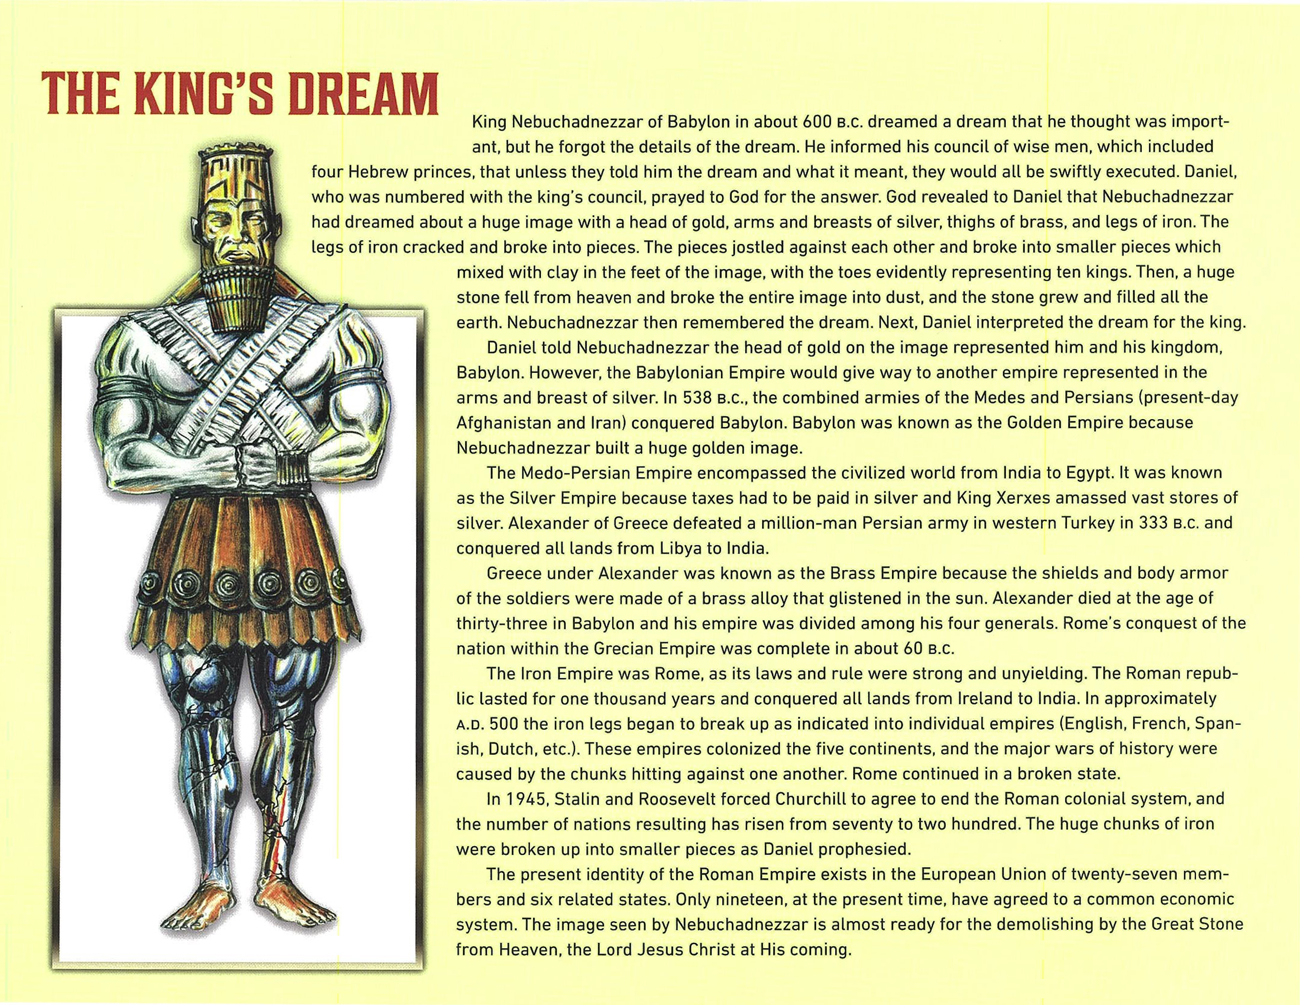 2021 Prophecy Calendar: February - The King's Dream